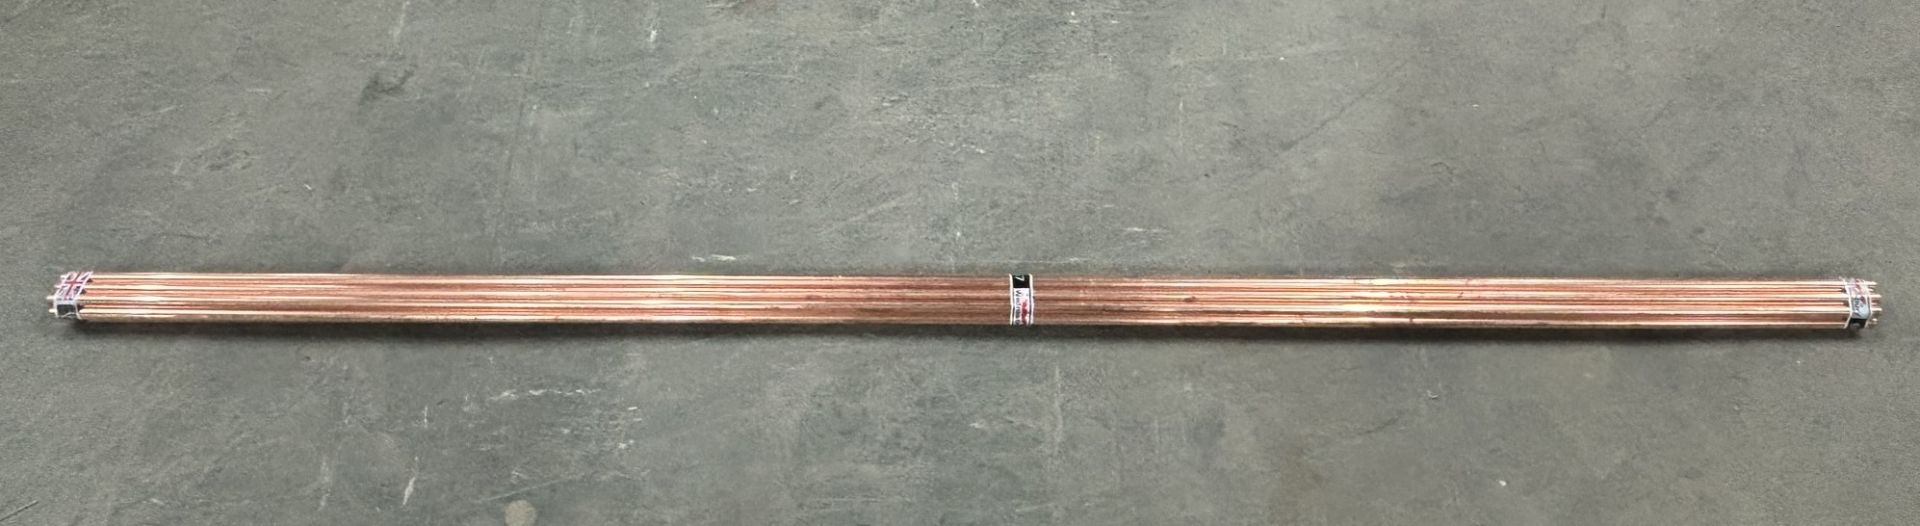 10 x 3Mtr x 21mm Copper Pipes